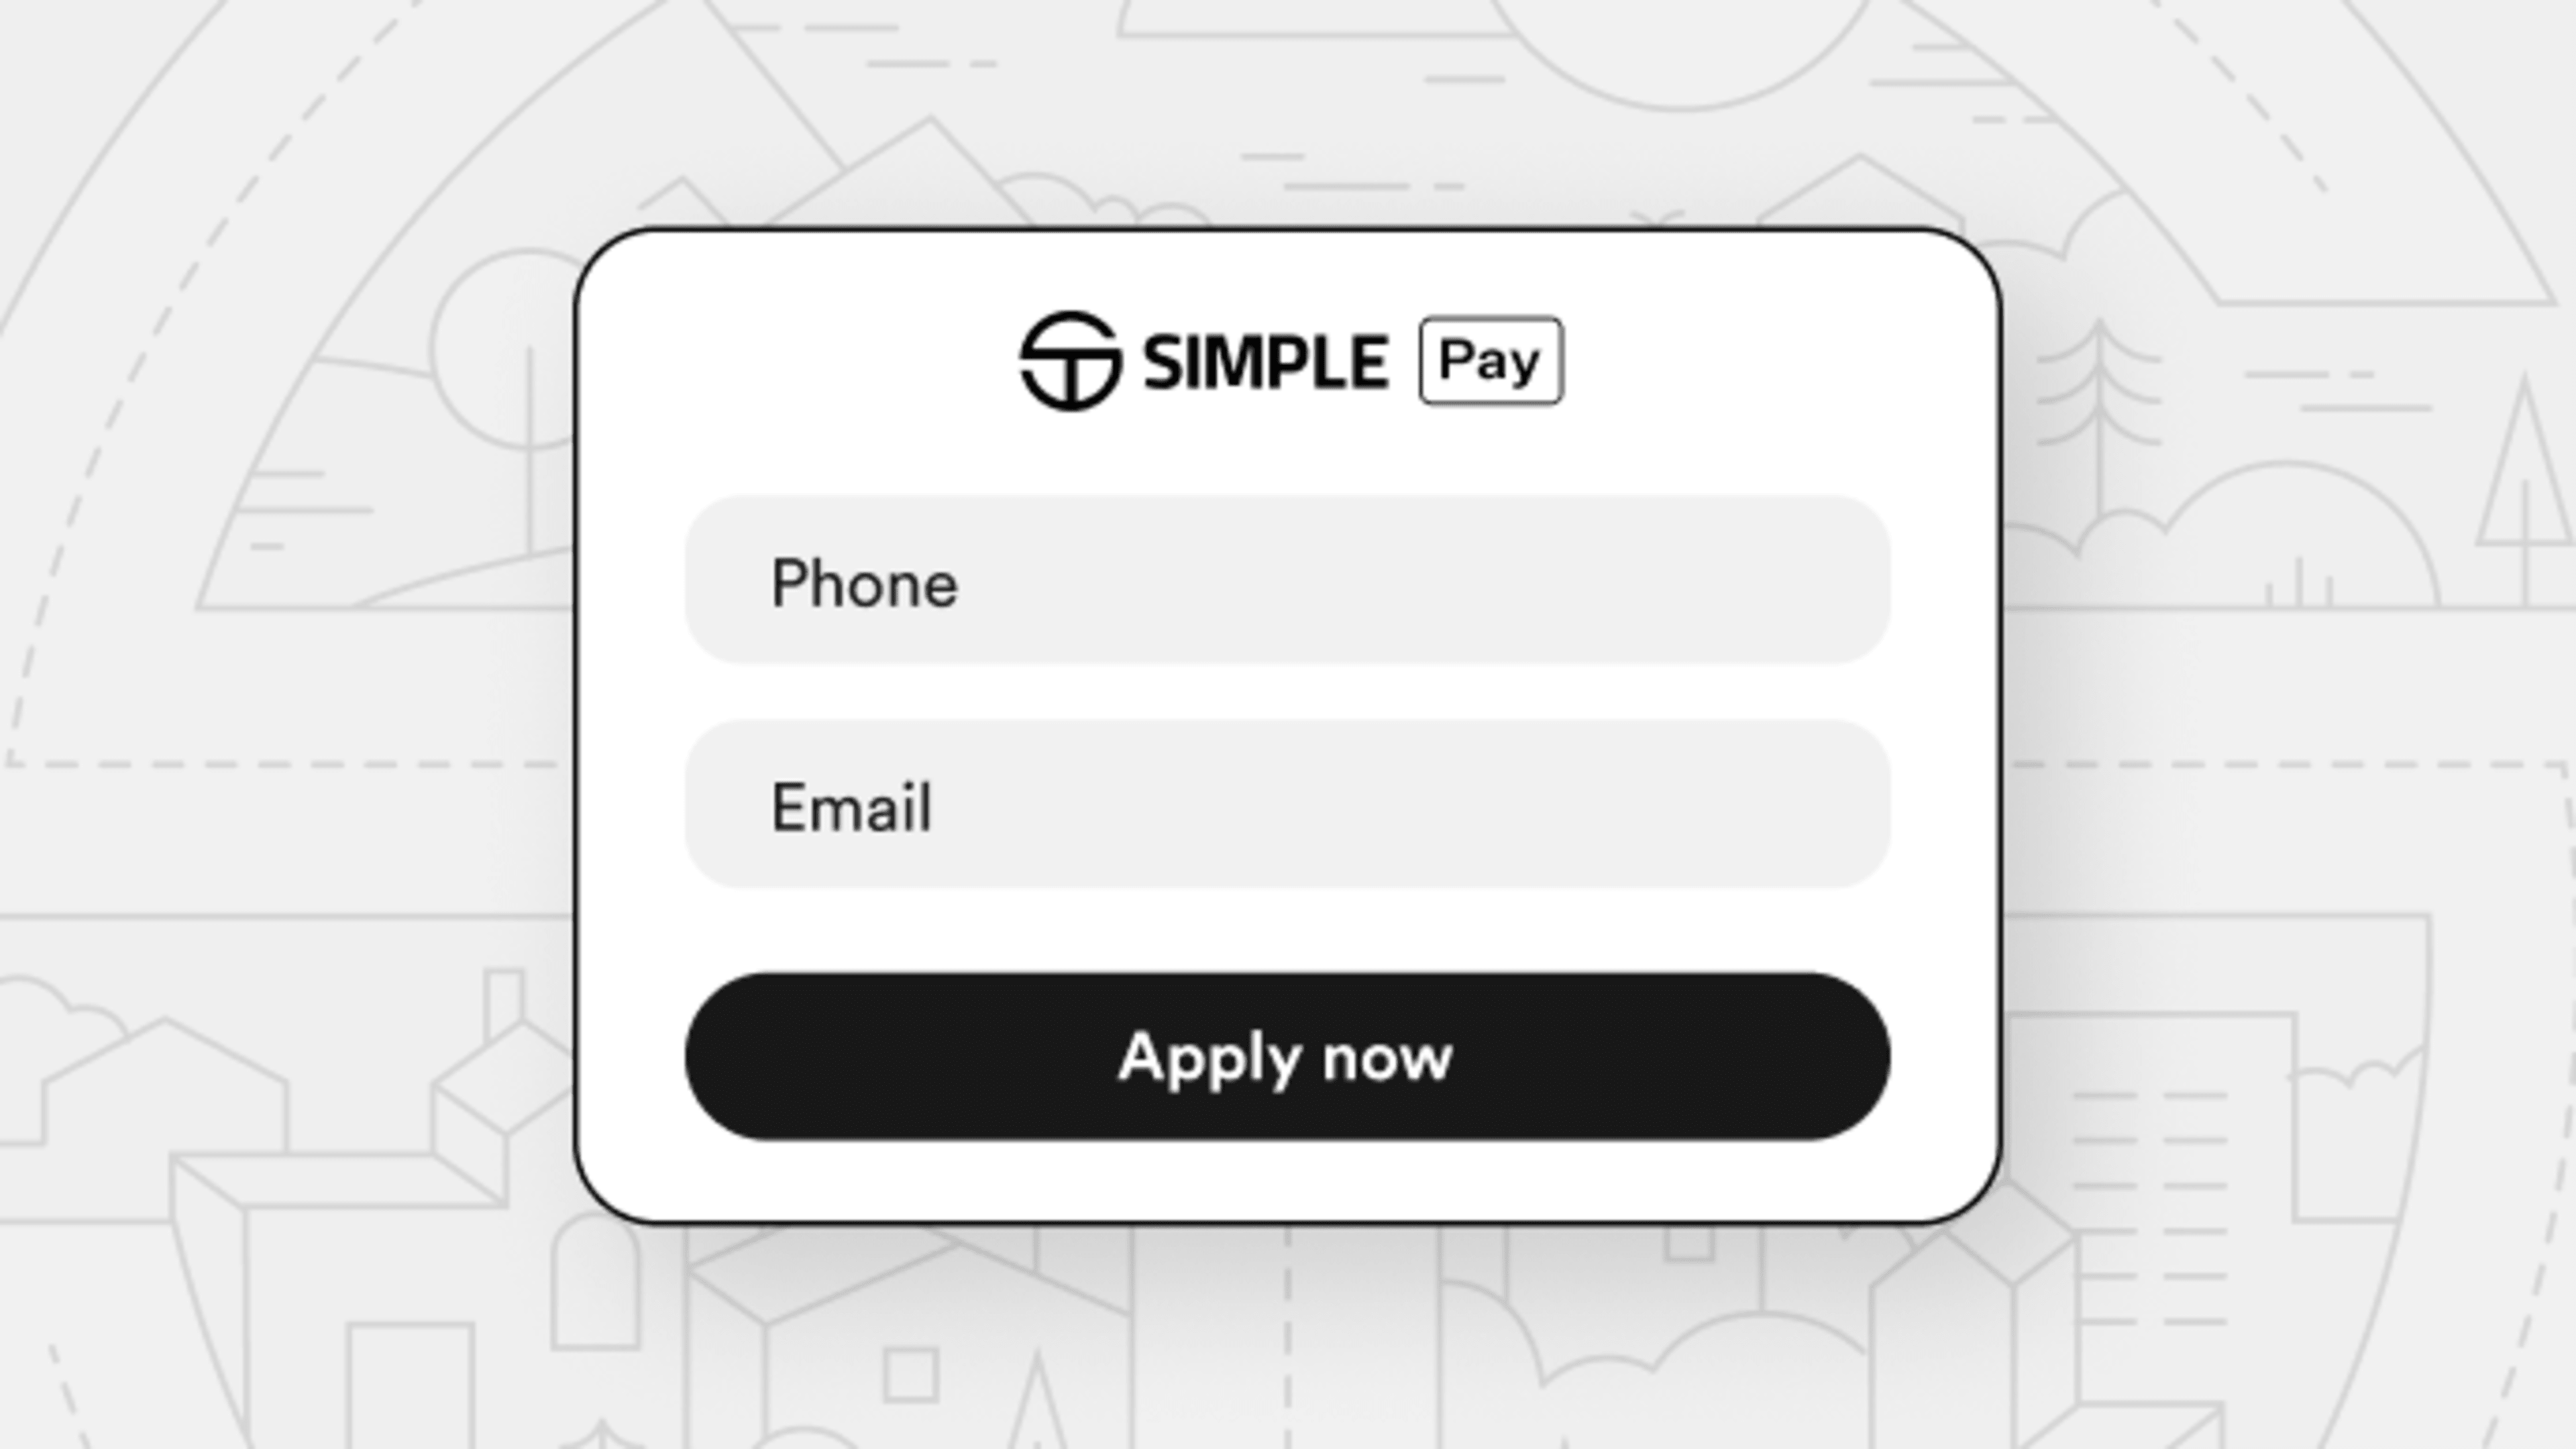 SimplePay login form